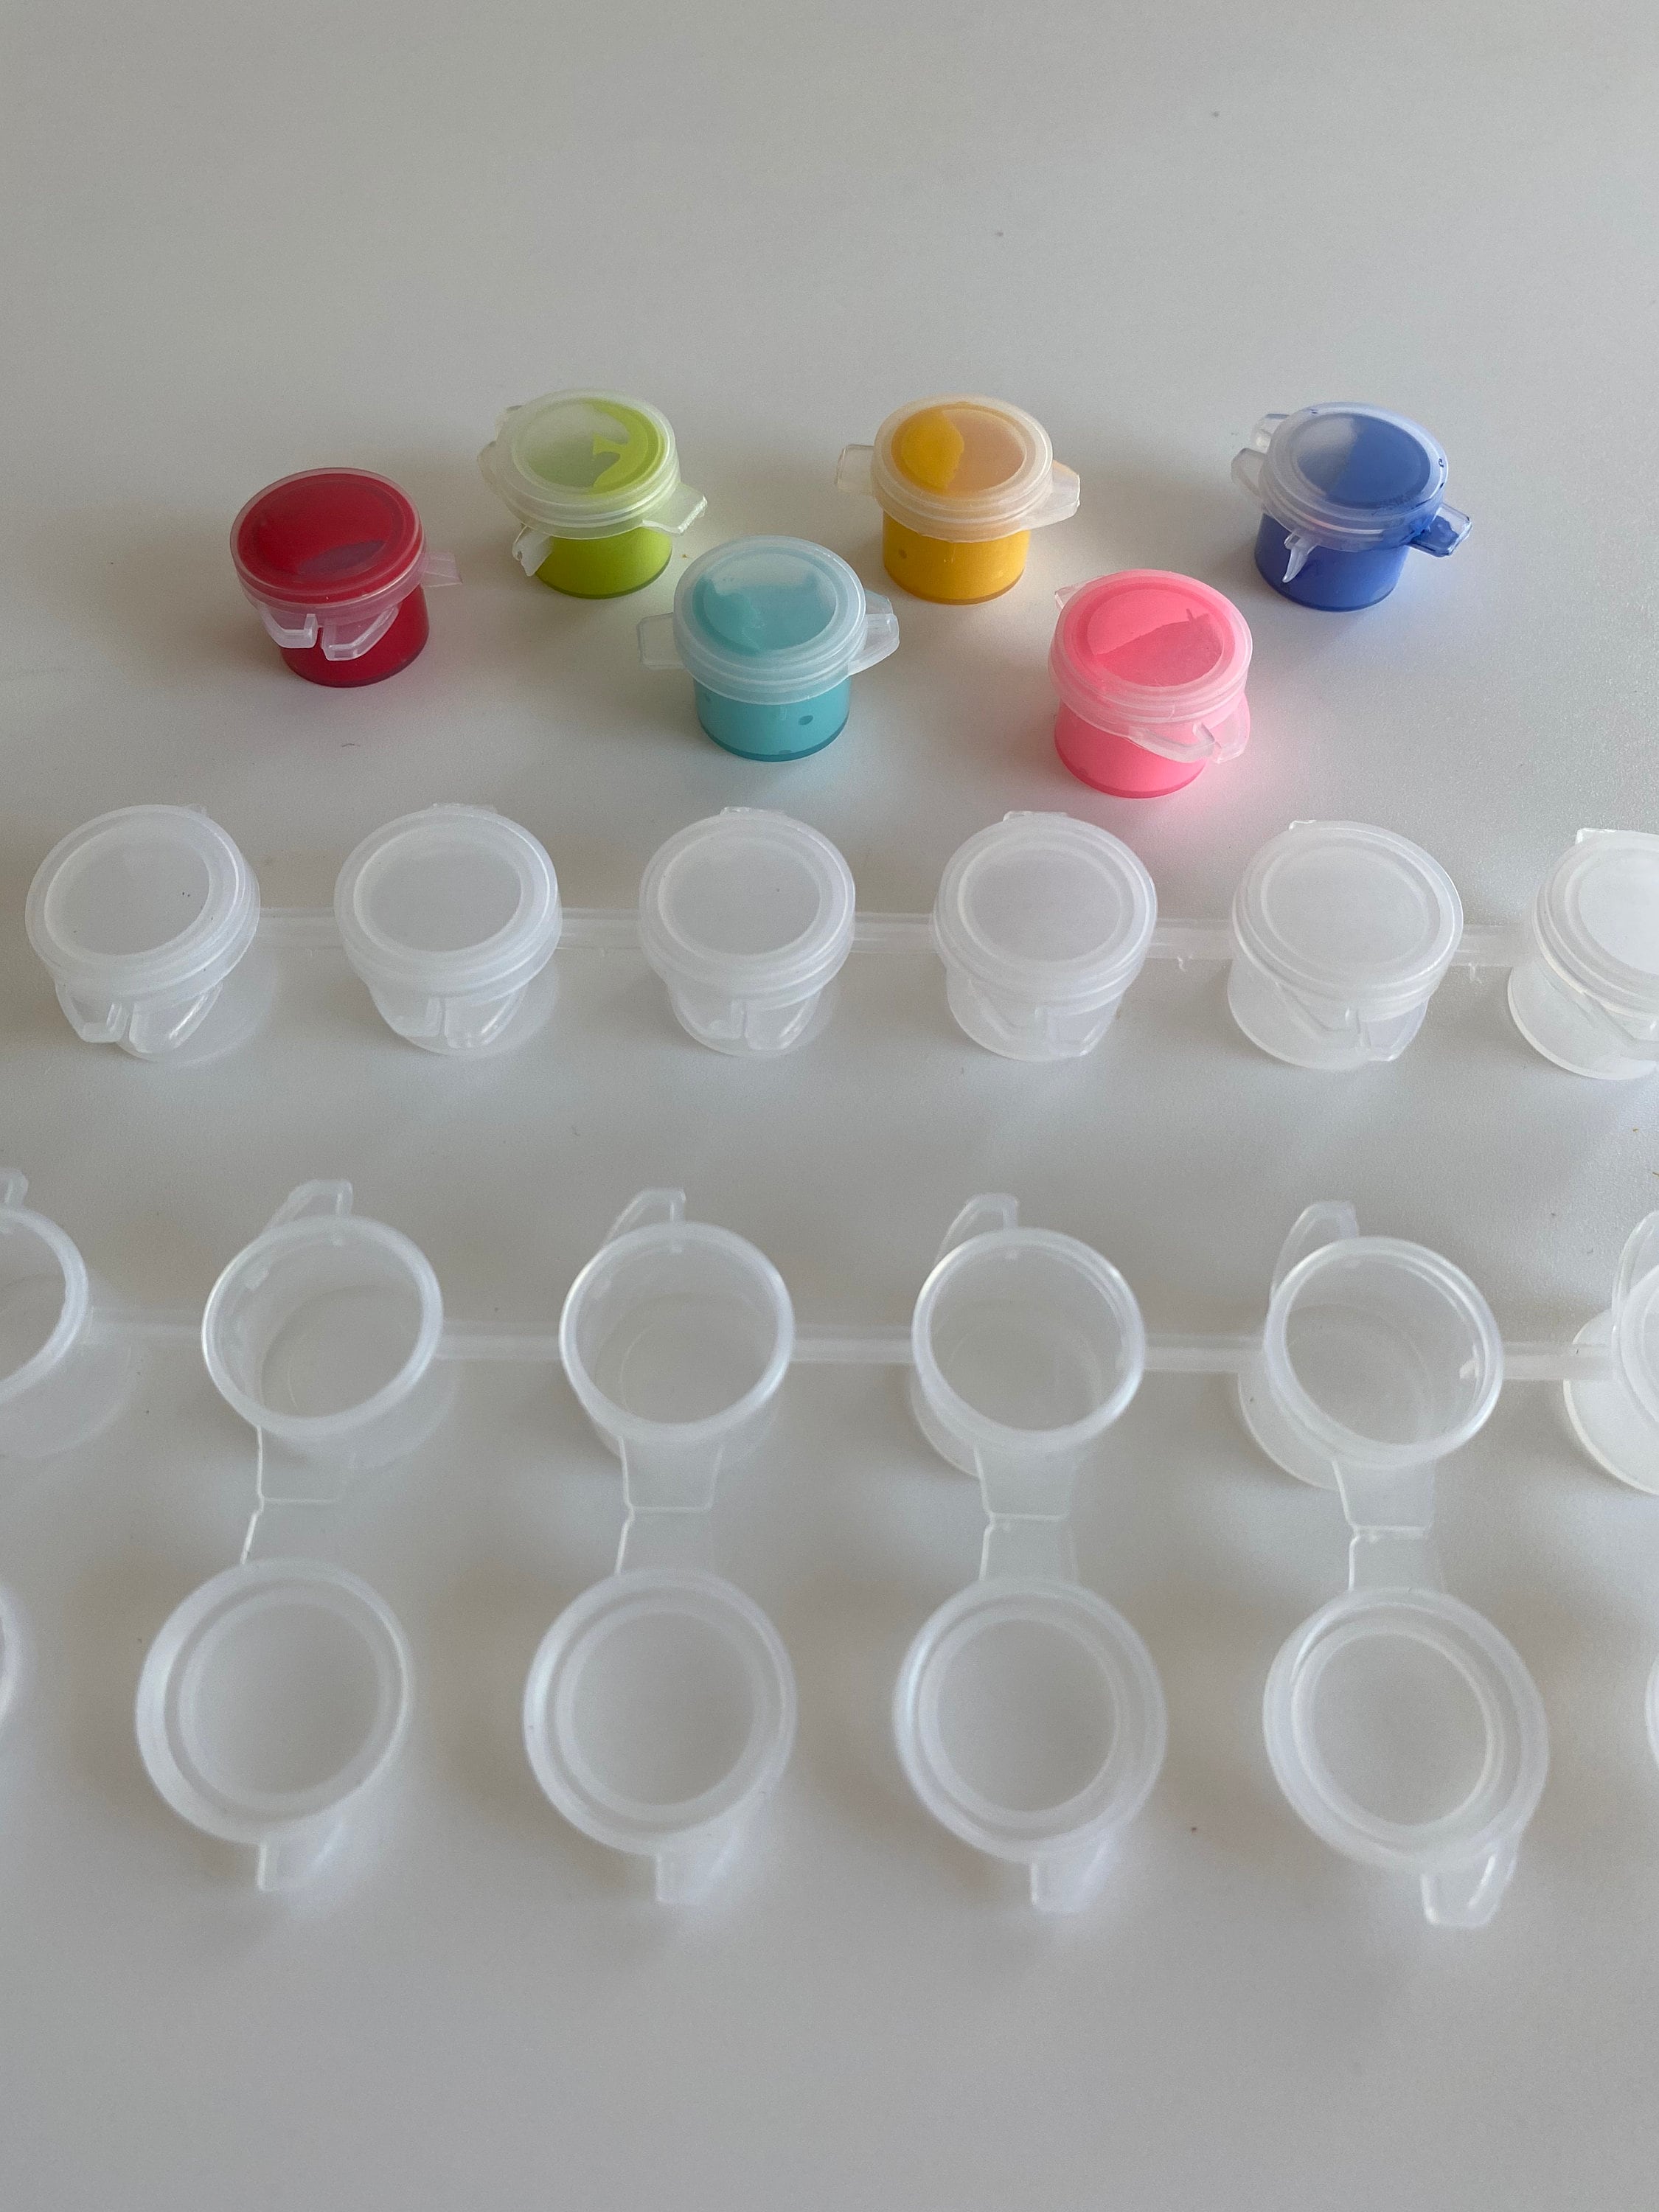 6 X 3ml Empty Mini Plastic Jars / Pots / Boxes, Airtight Storage